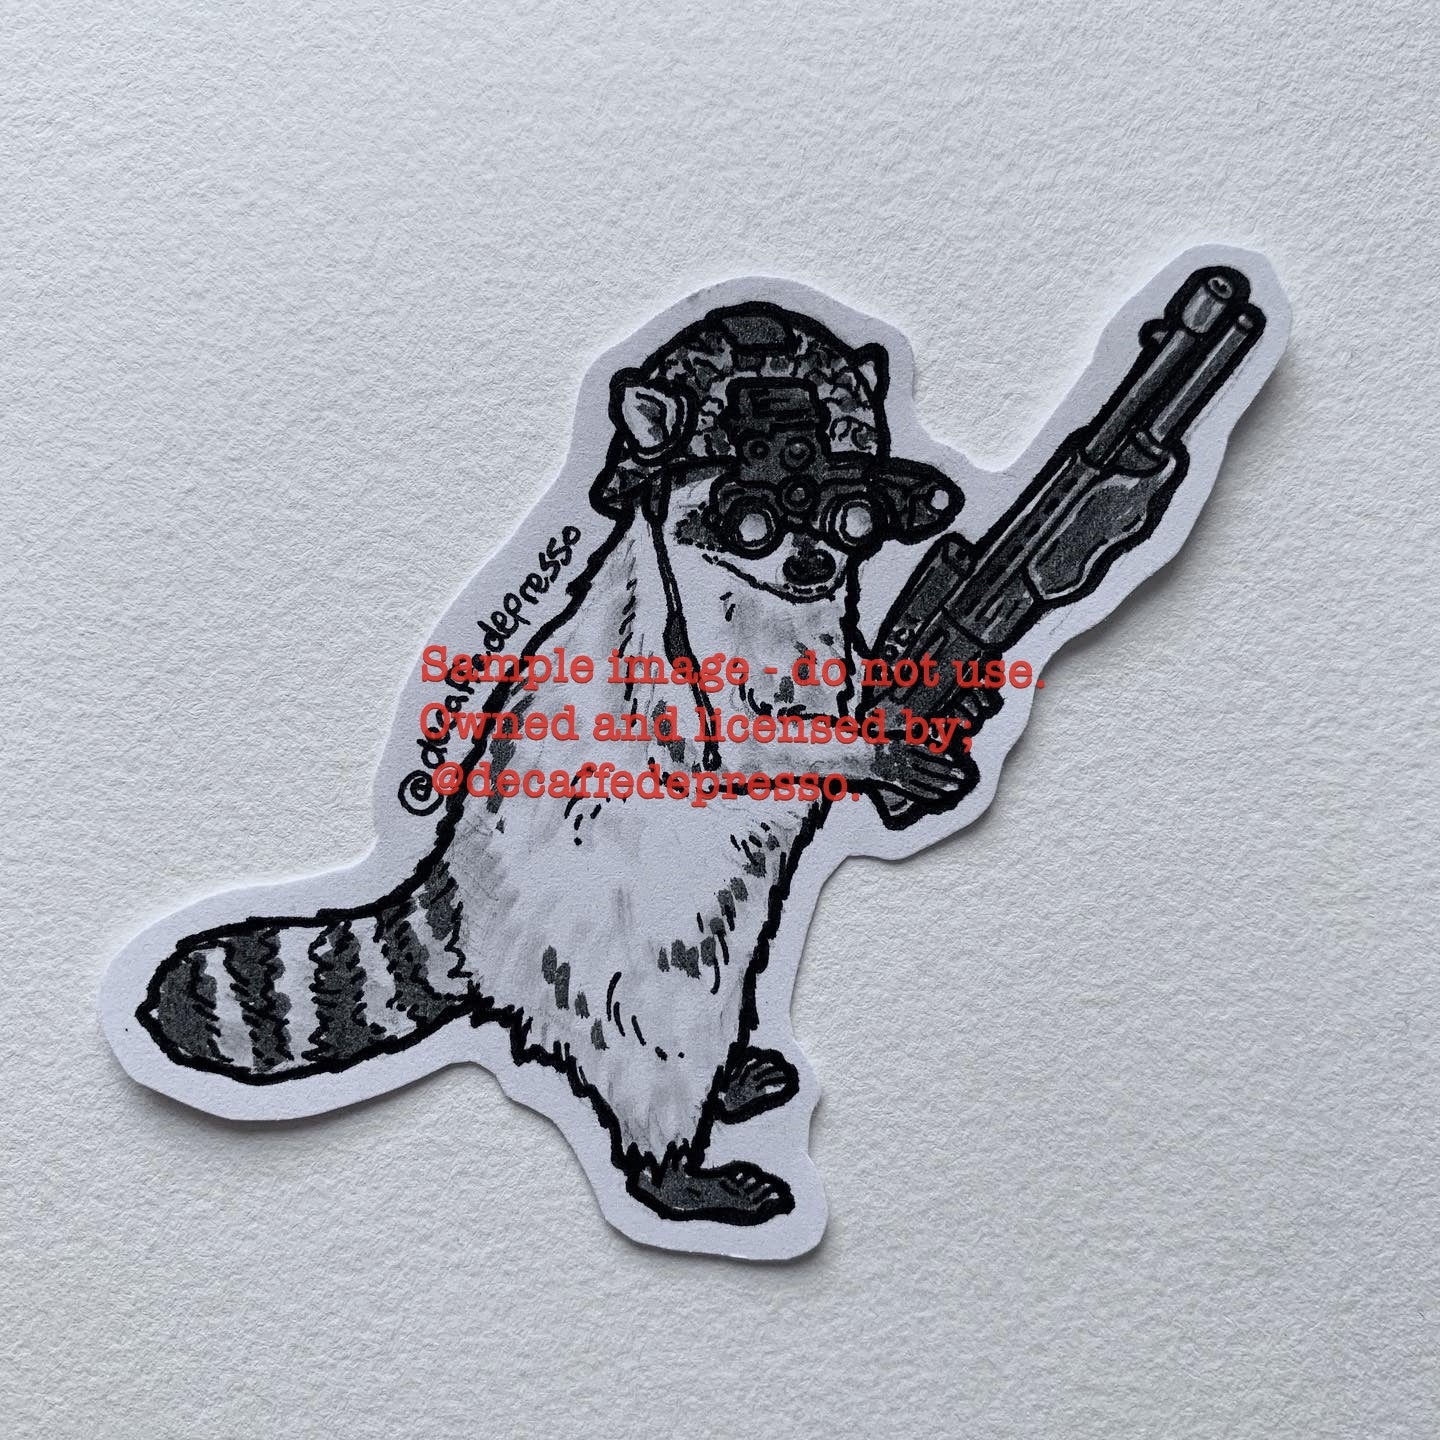 Vector Image Of A Raccoon Stock Illustration  Download Image Now  Raccoon  Animal Animal Wildlife  iStock